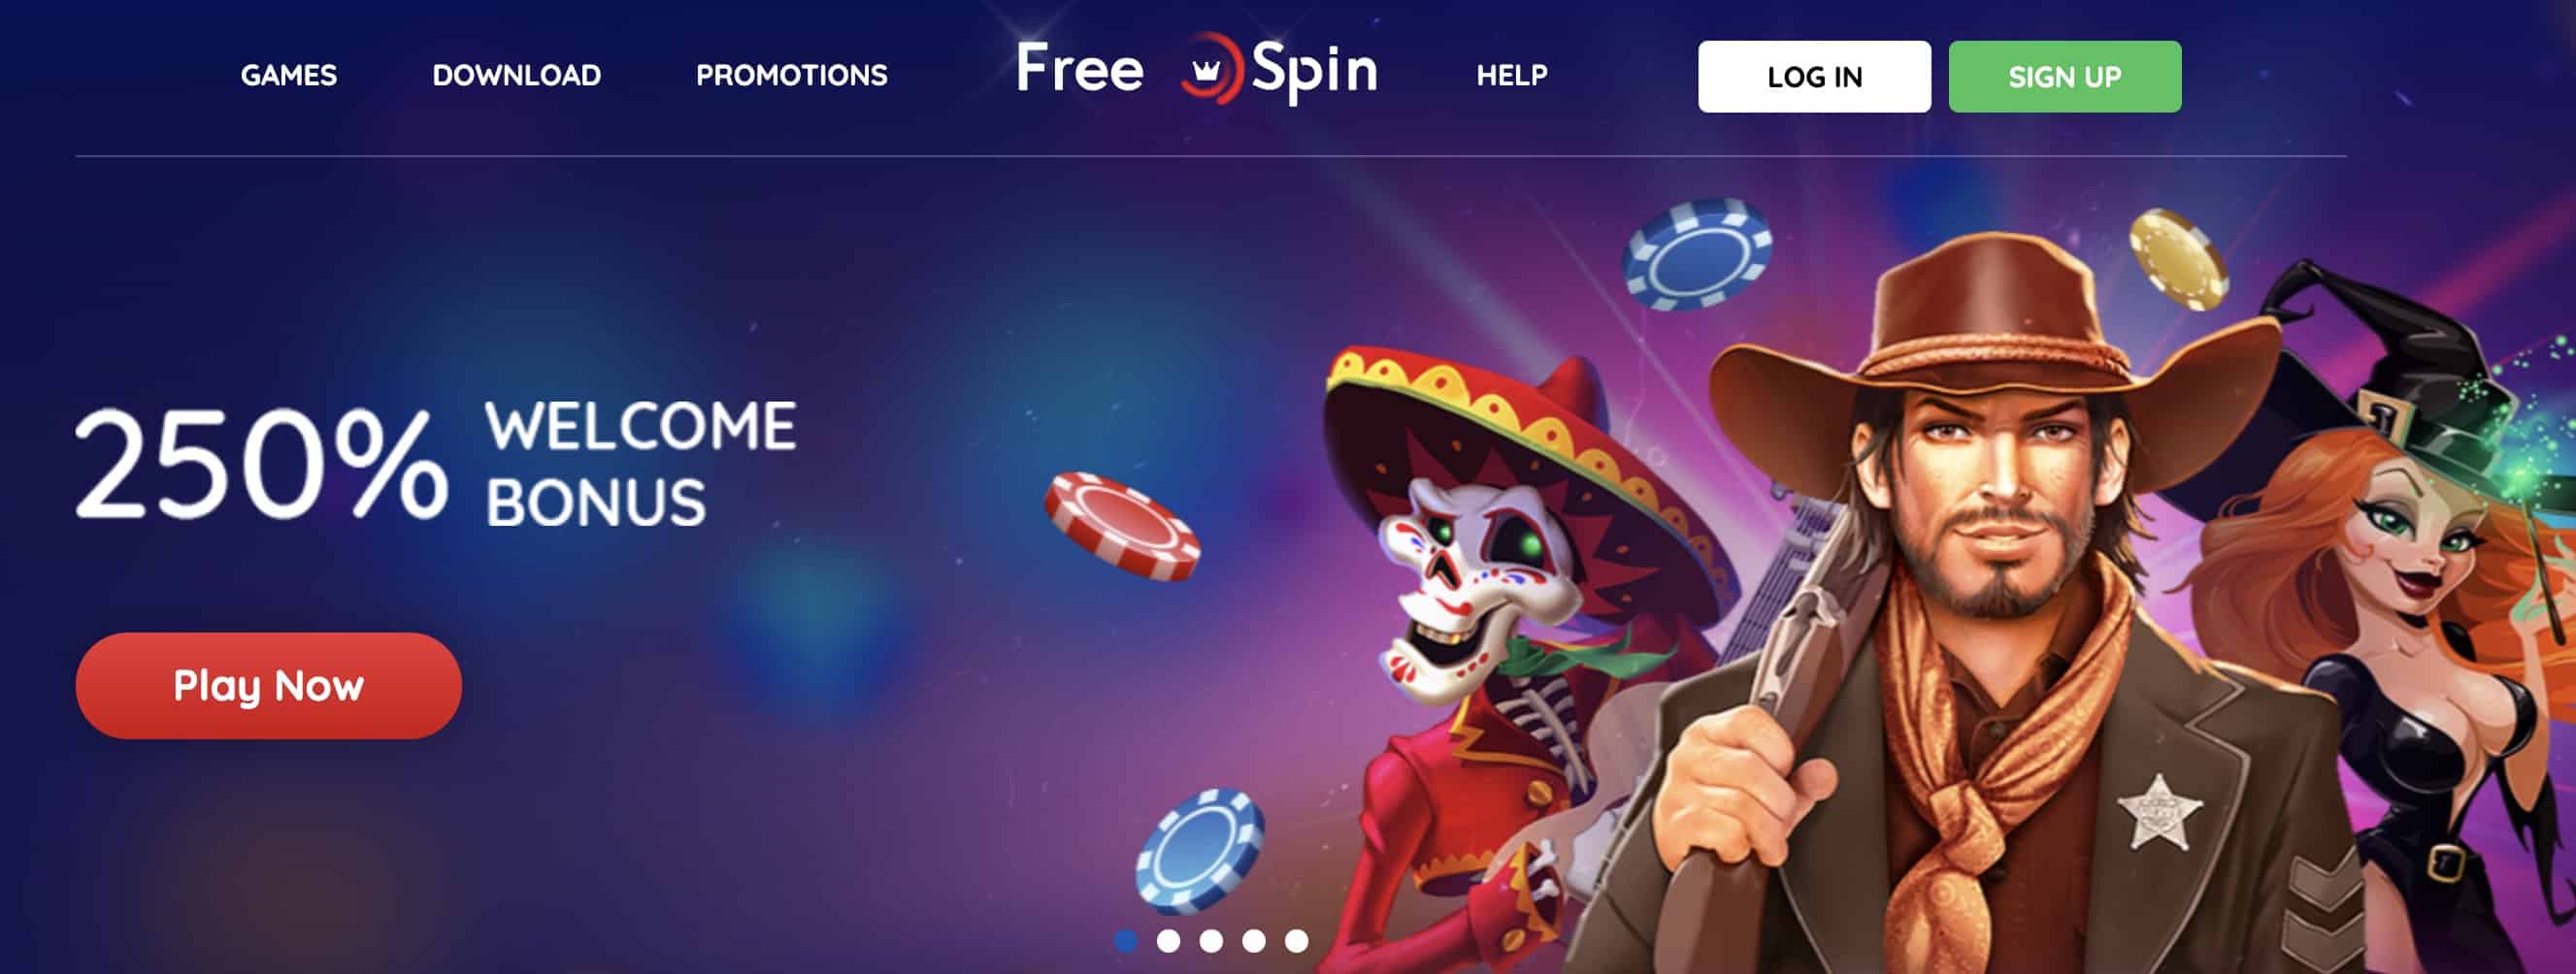 Free Spin Casino Test